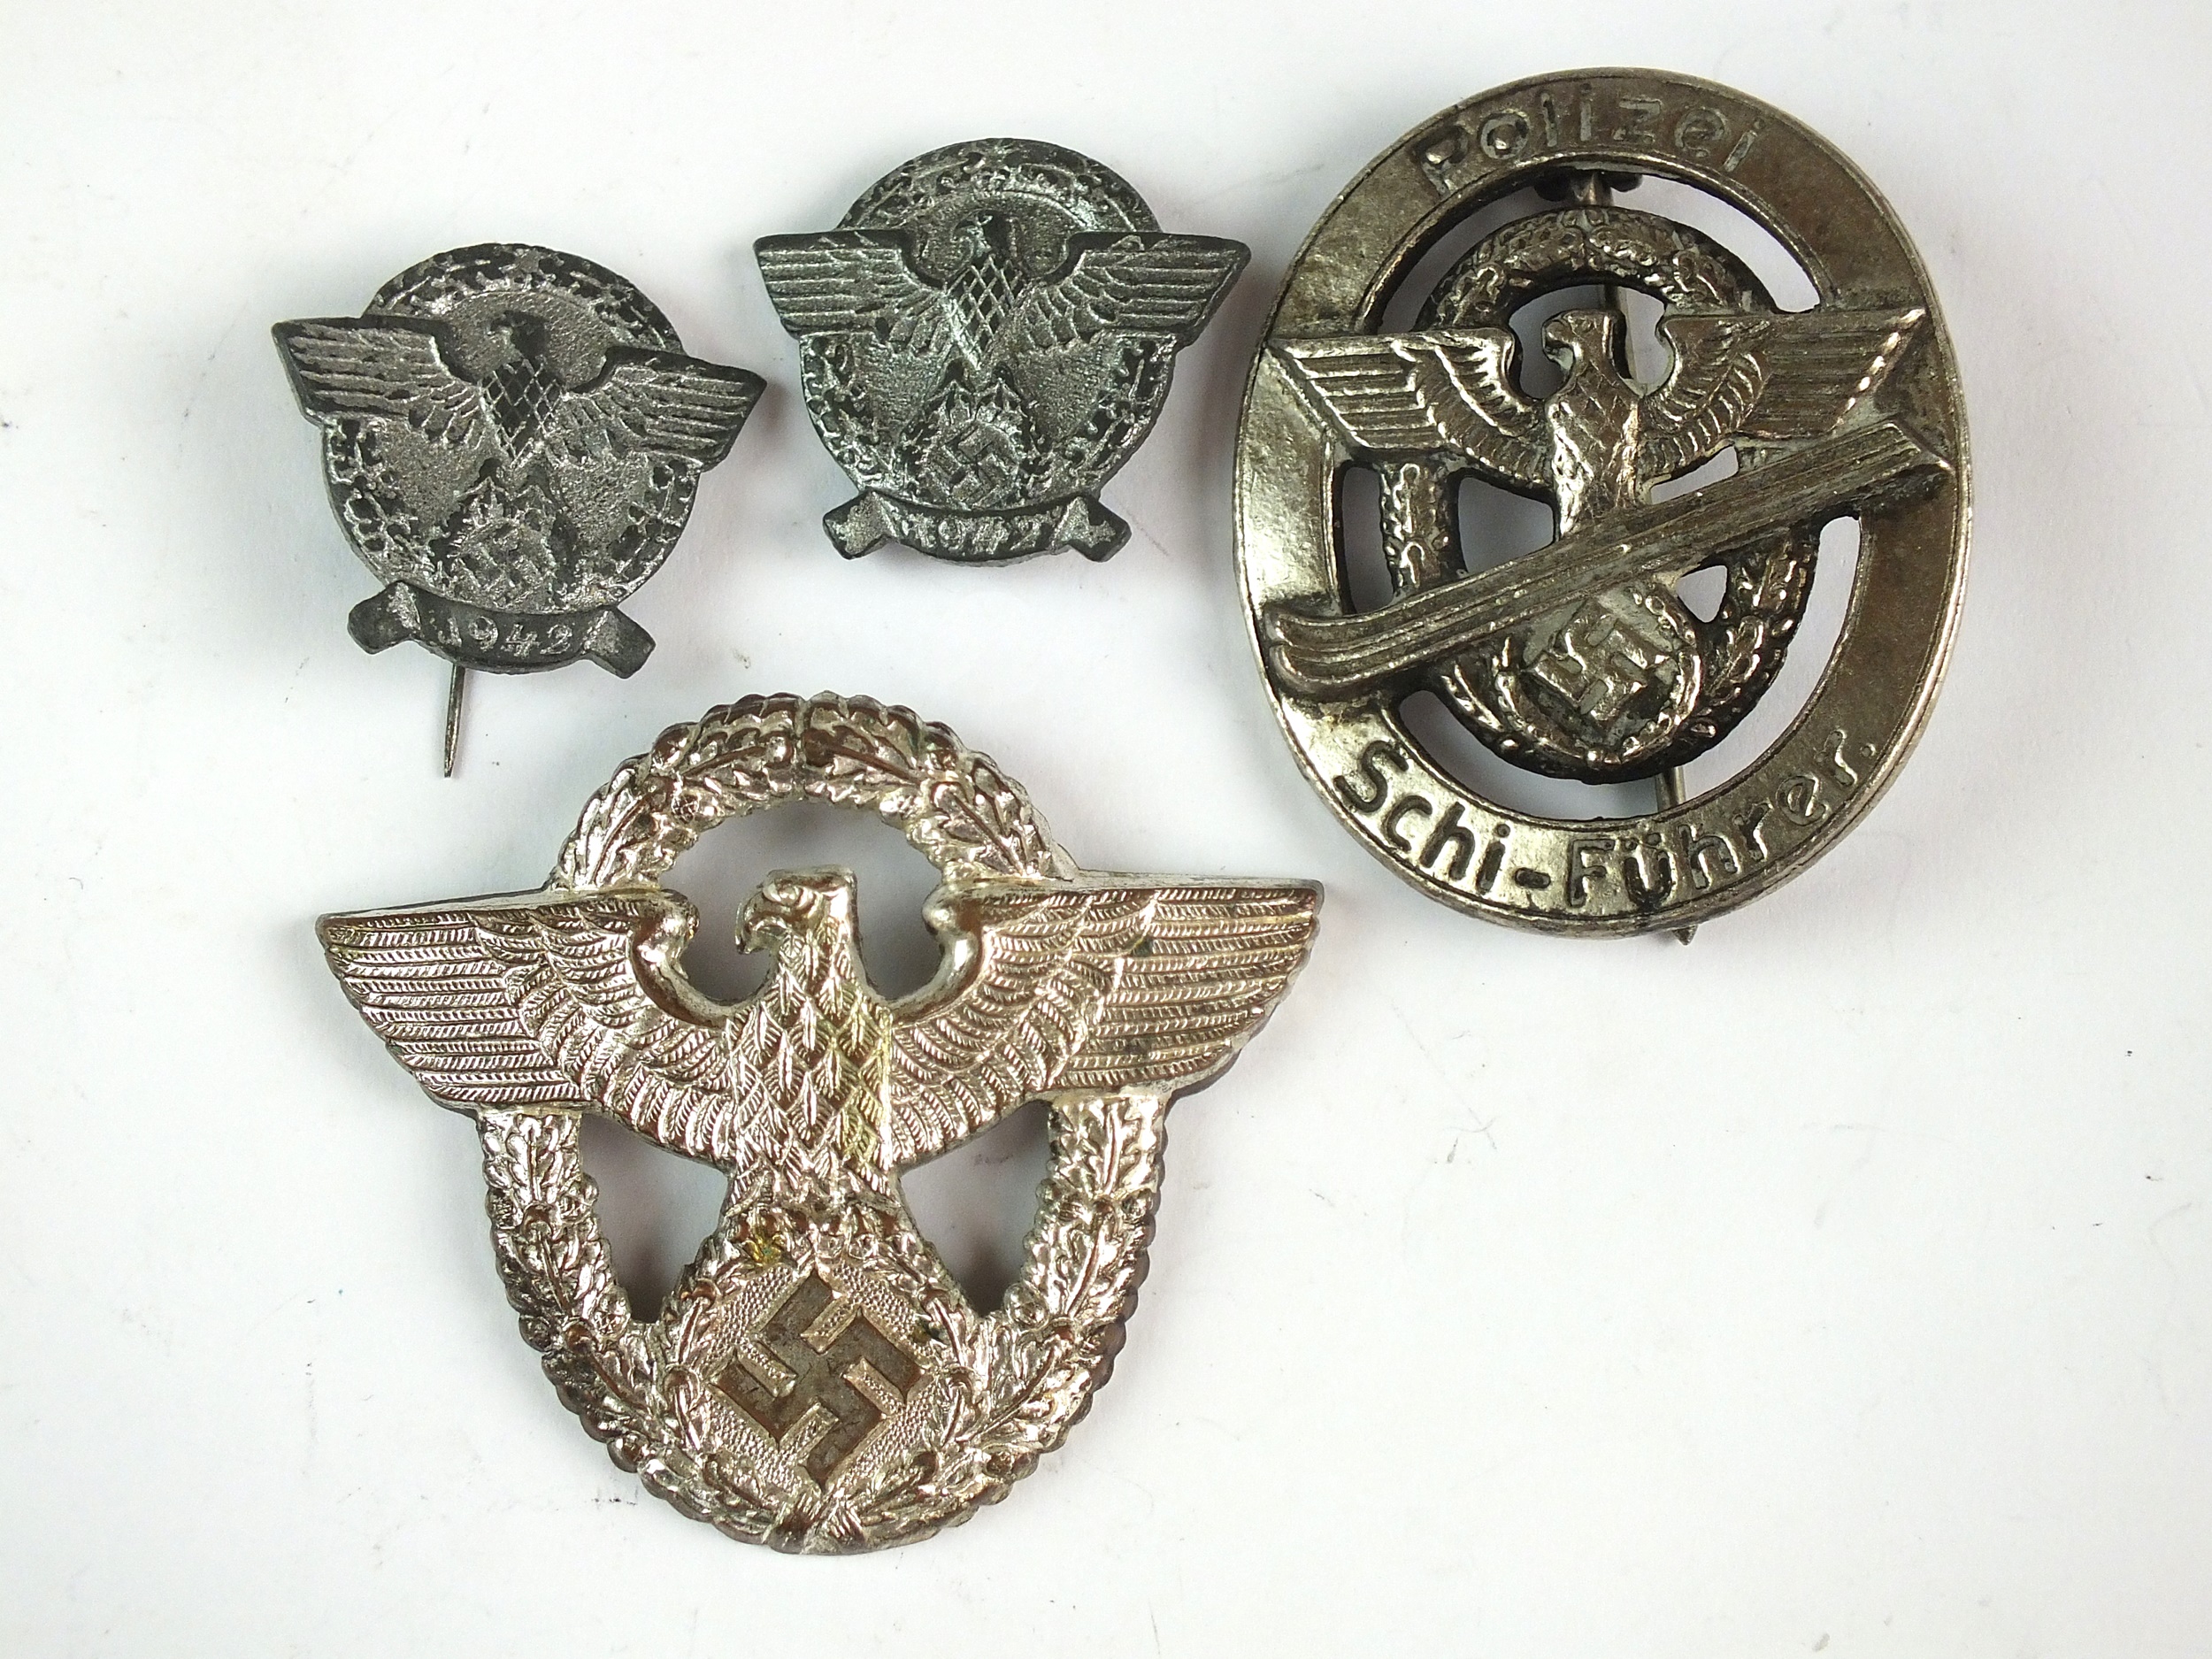 Four German police badges